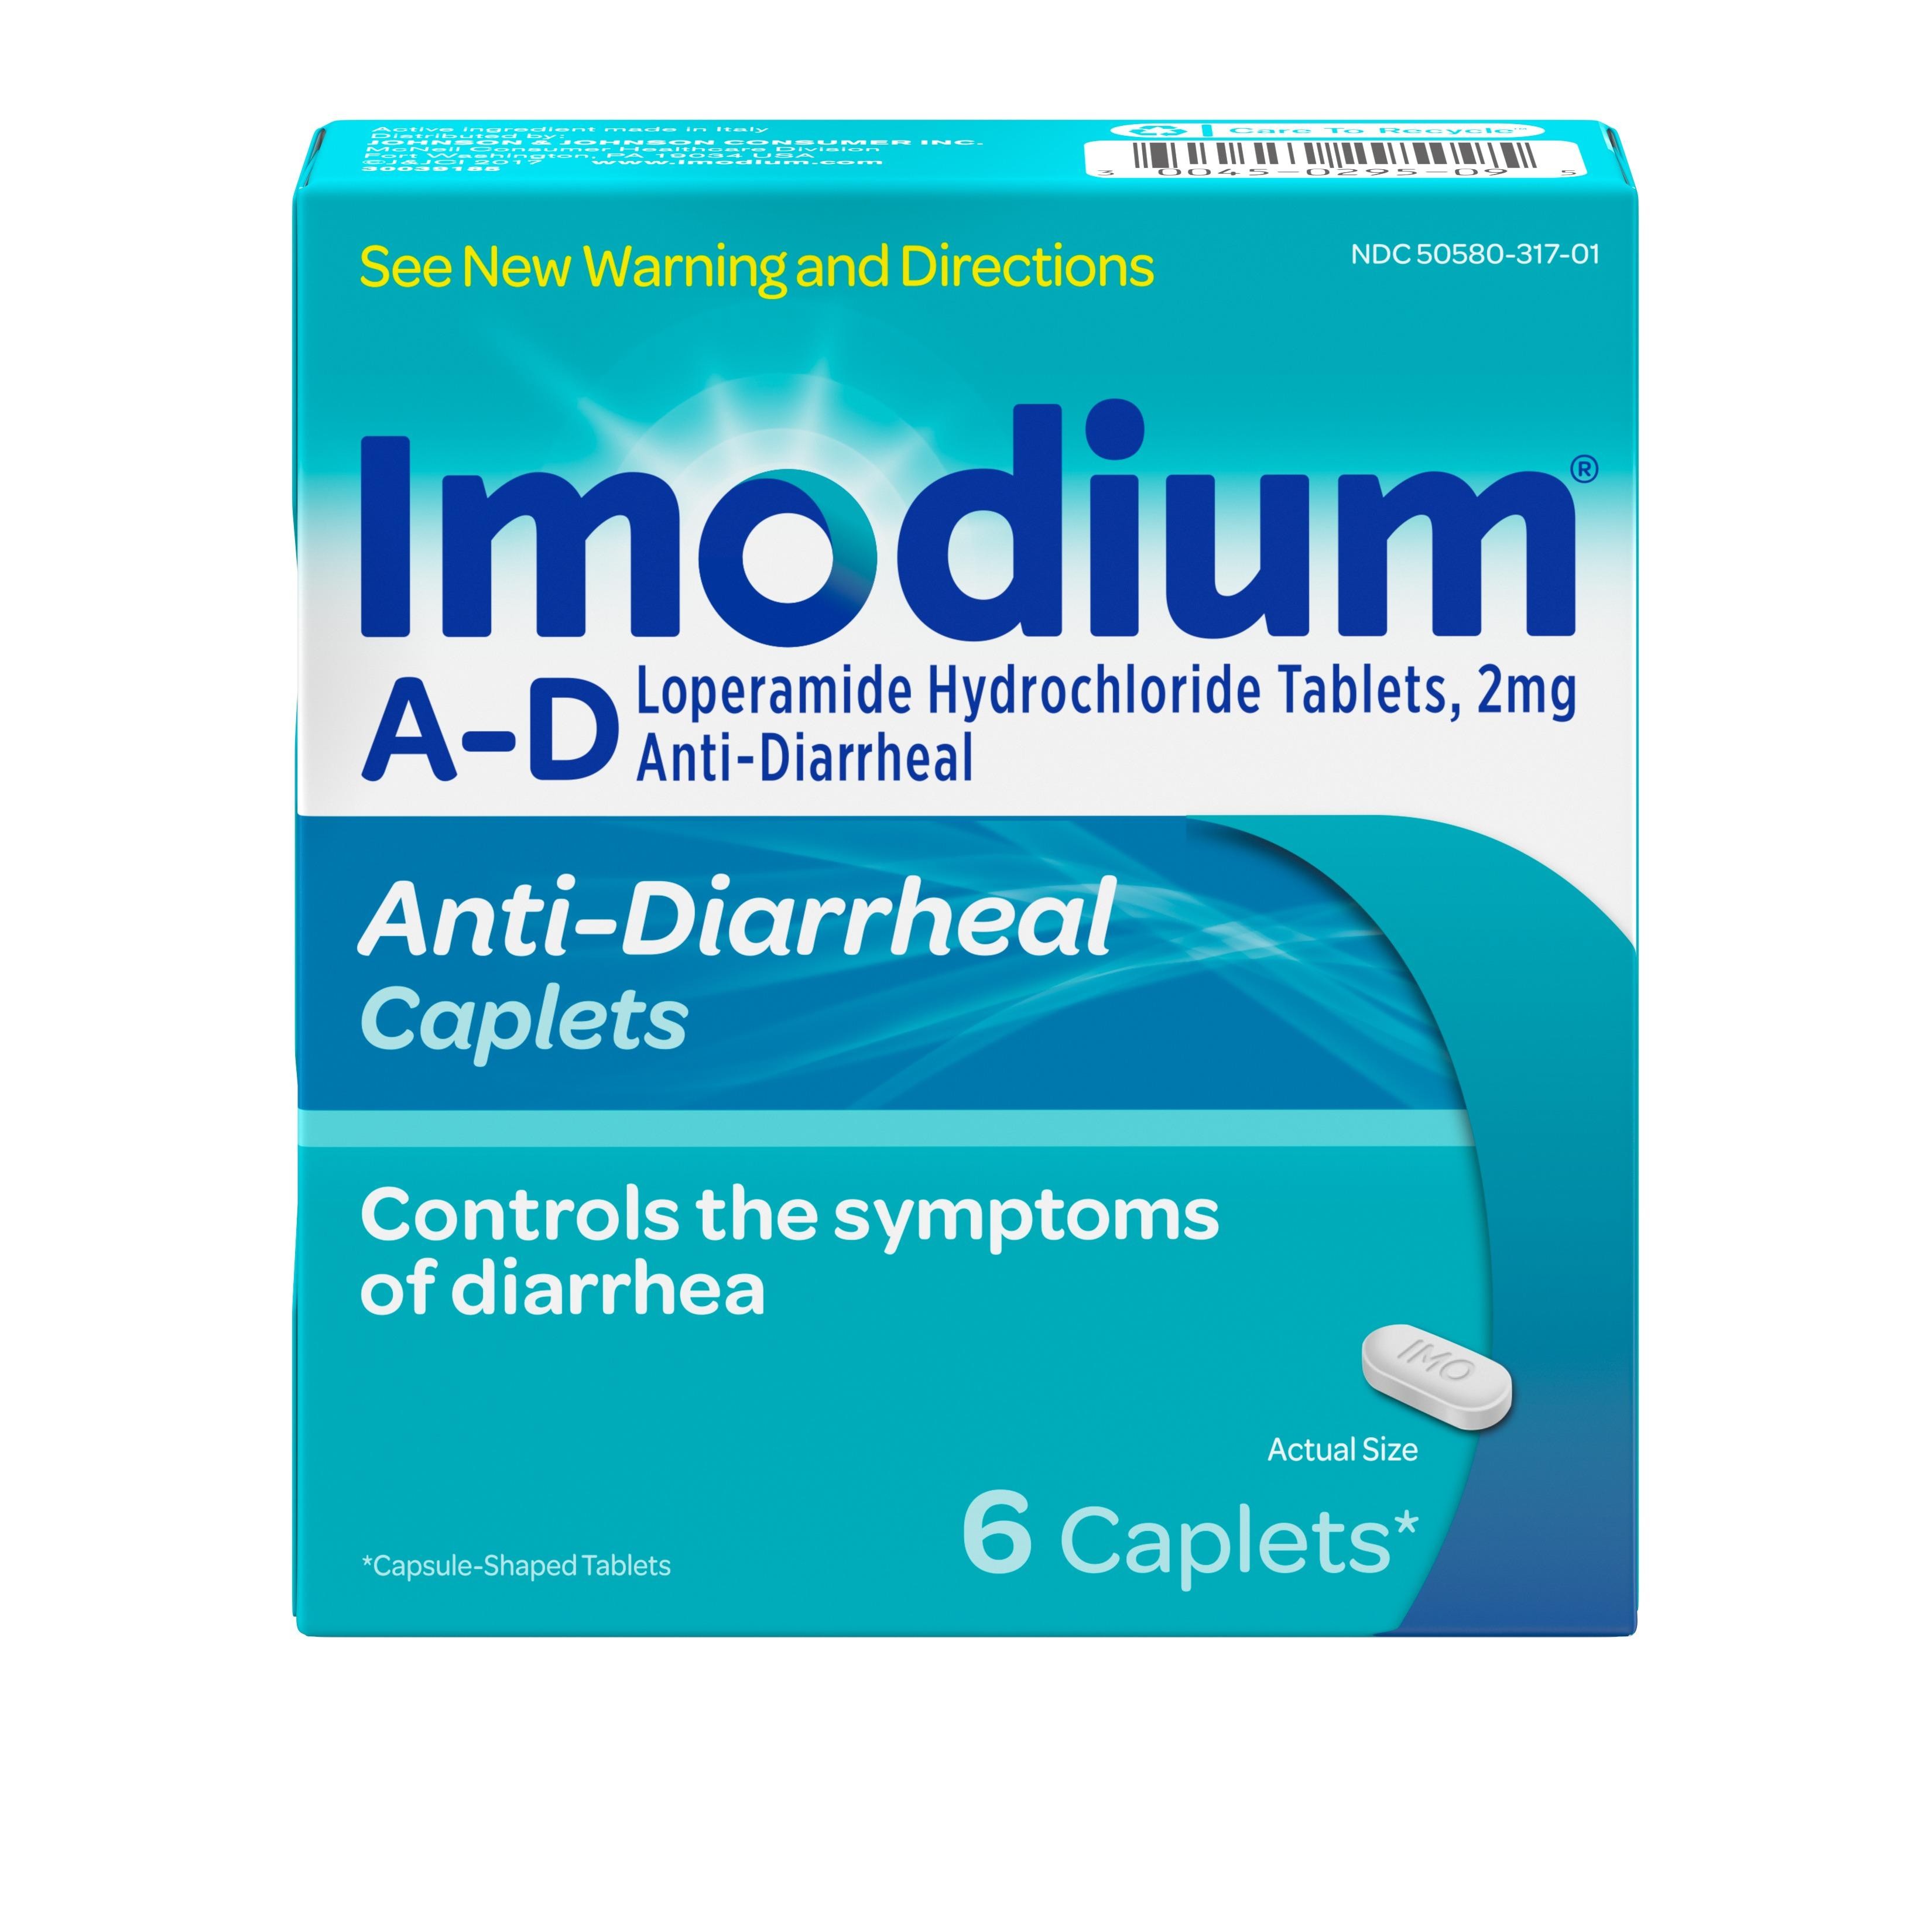 Imodium A-D Diarrhea Relief Caplets Loperamide Hydrochloride - 6 Count